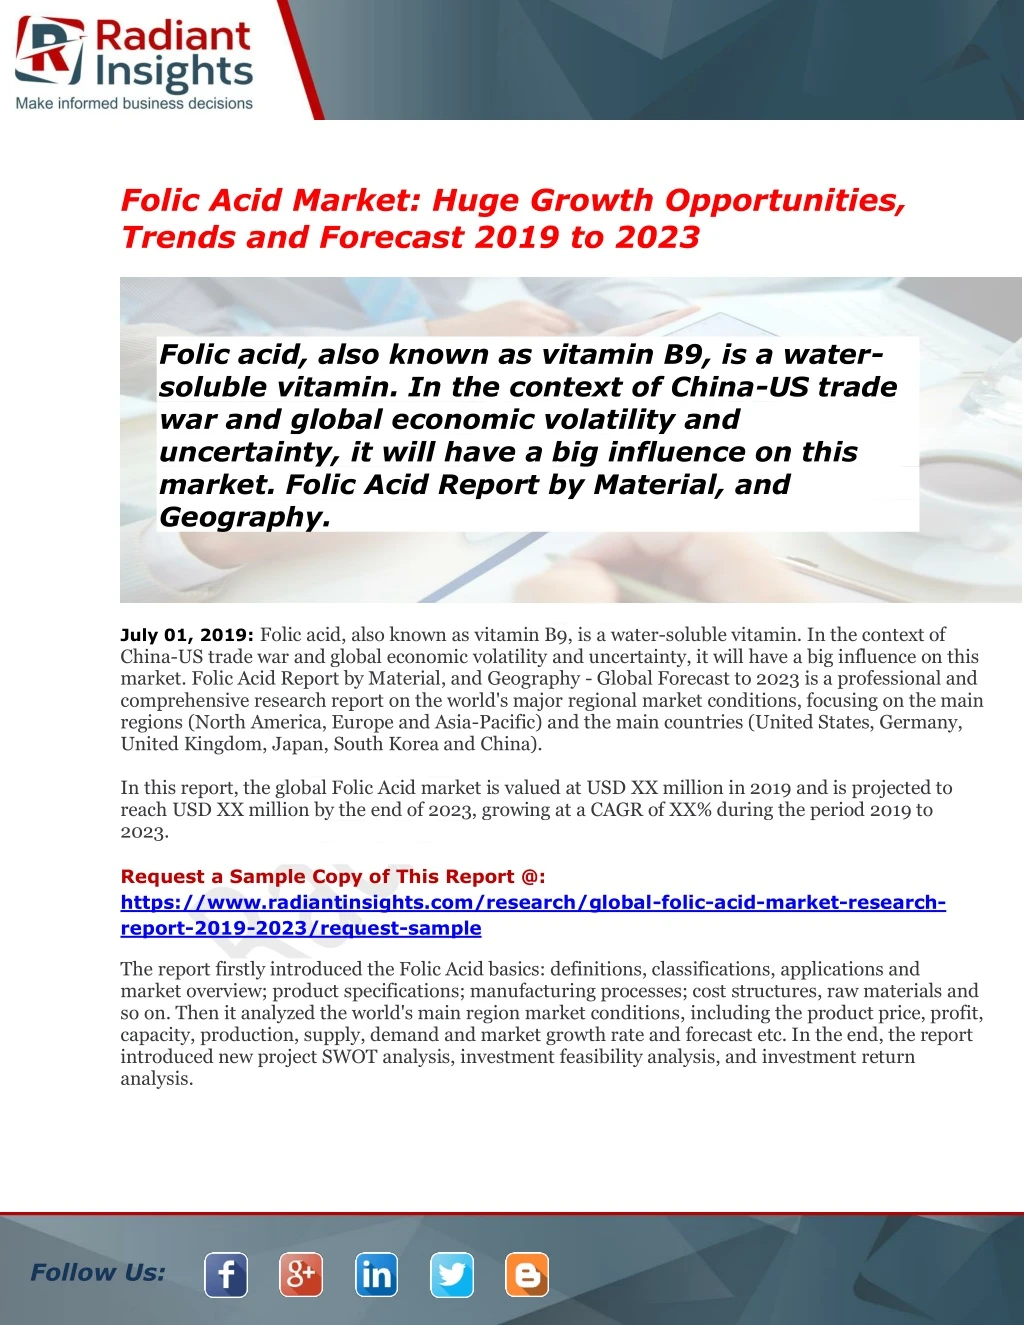 folic acid market huge growth opportunities